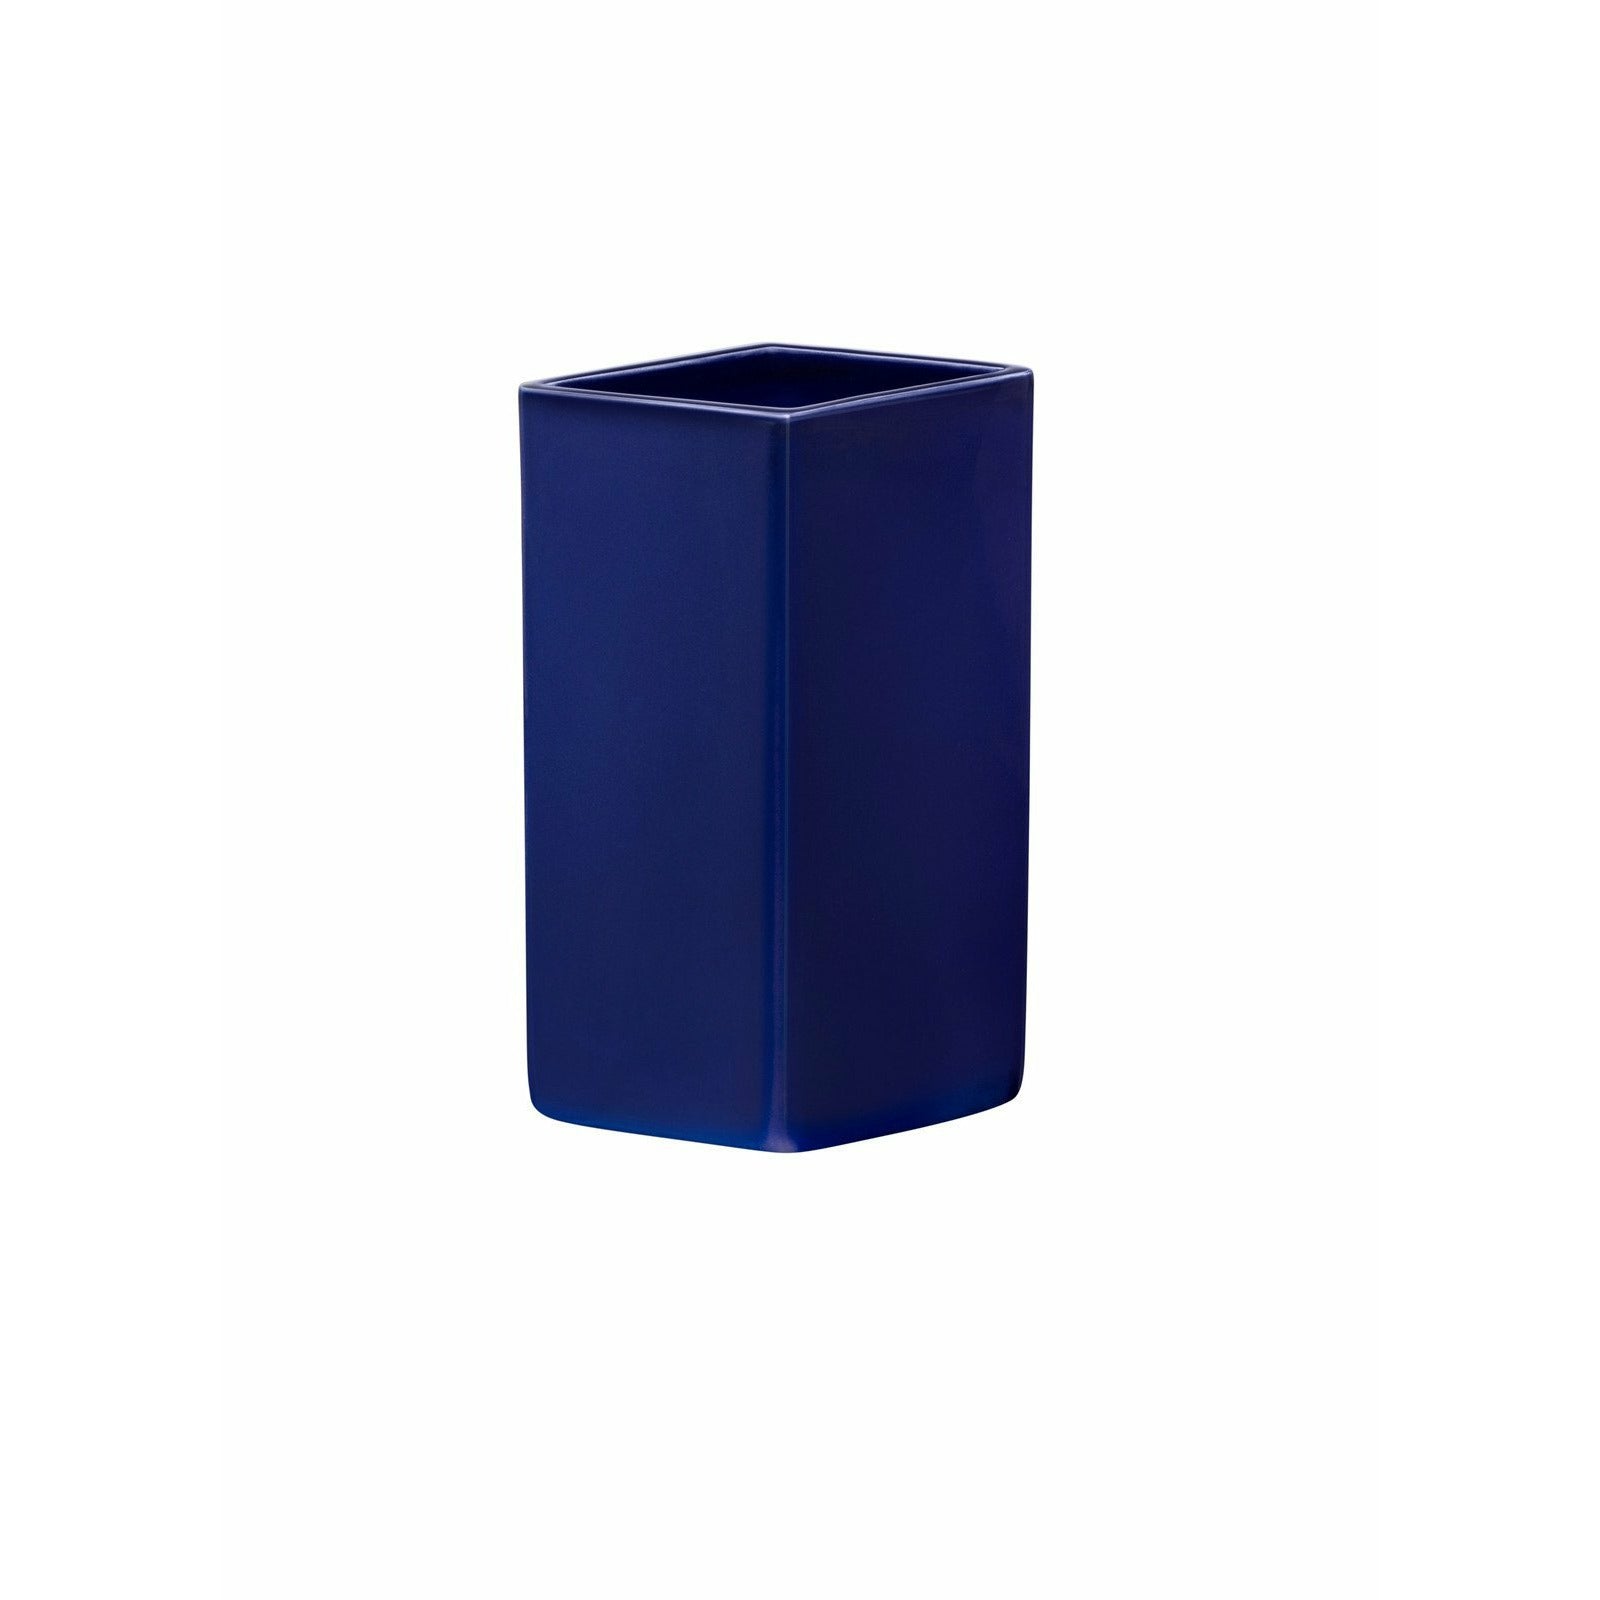 Iittala ruutu vaso de cerâmica azul escuro, 18 cm